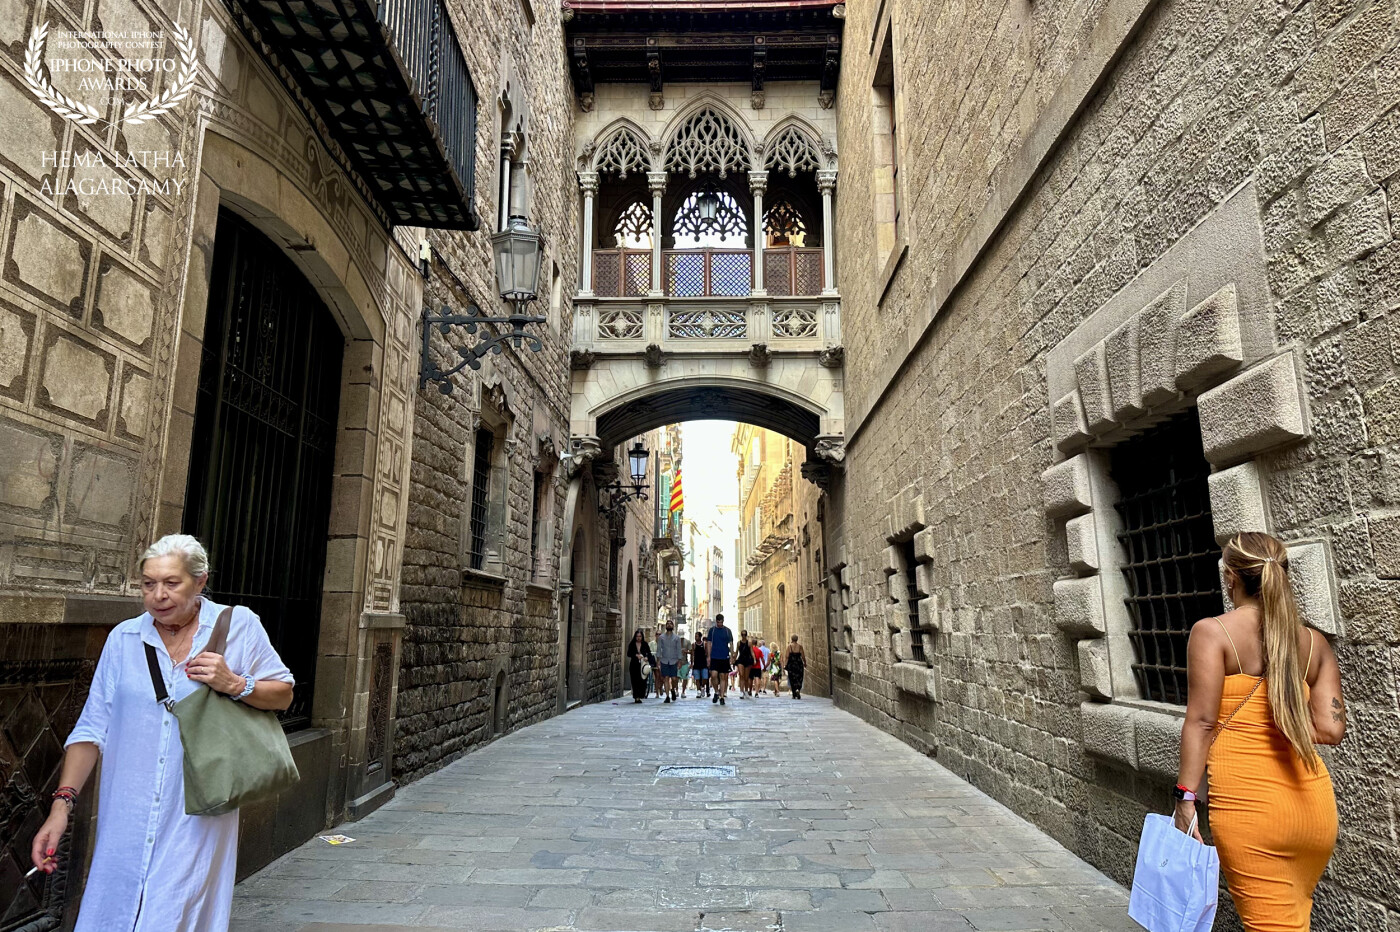 Exploring Barcelona. Tired feet but happy heart. <br />
📍Ciutat Vella, Barcelona, Spain